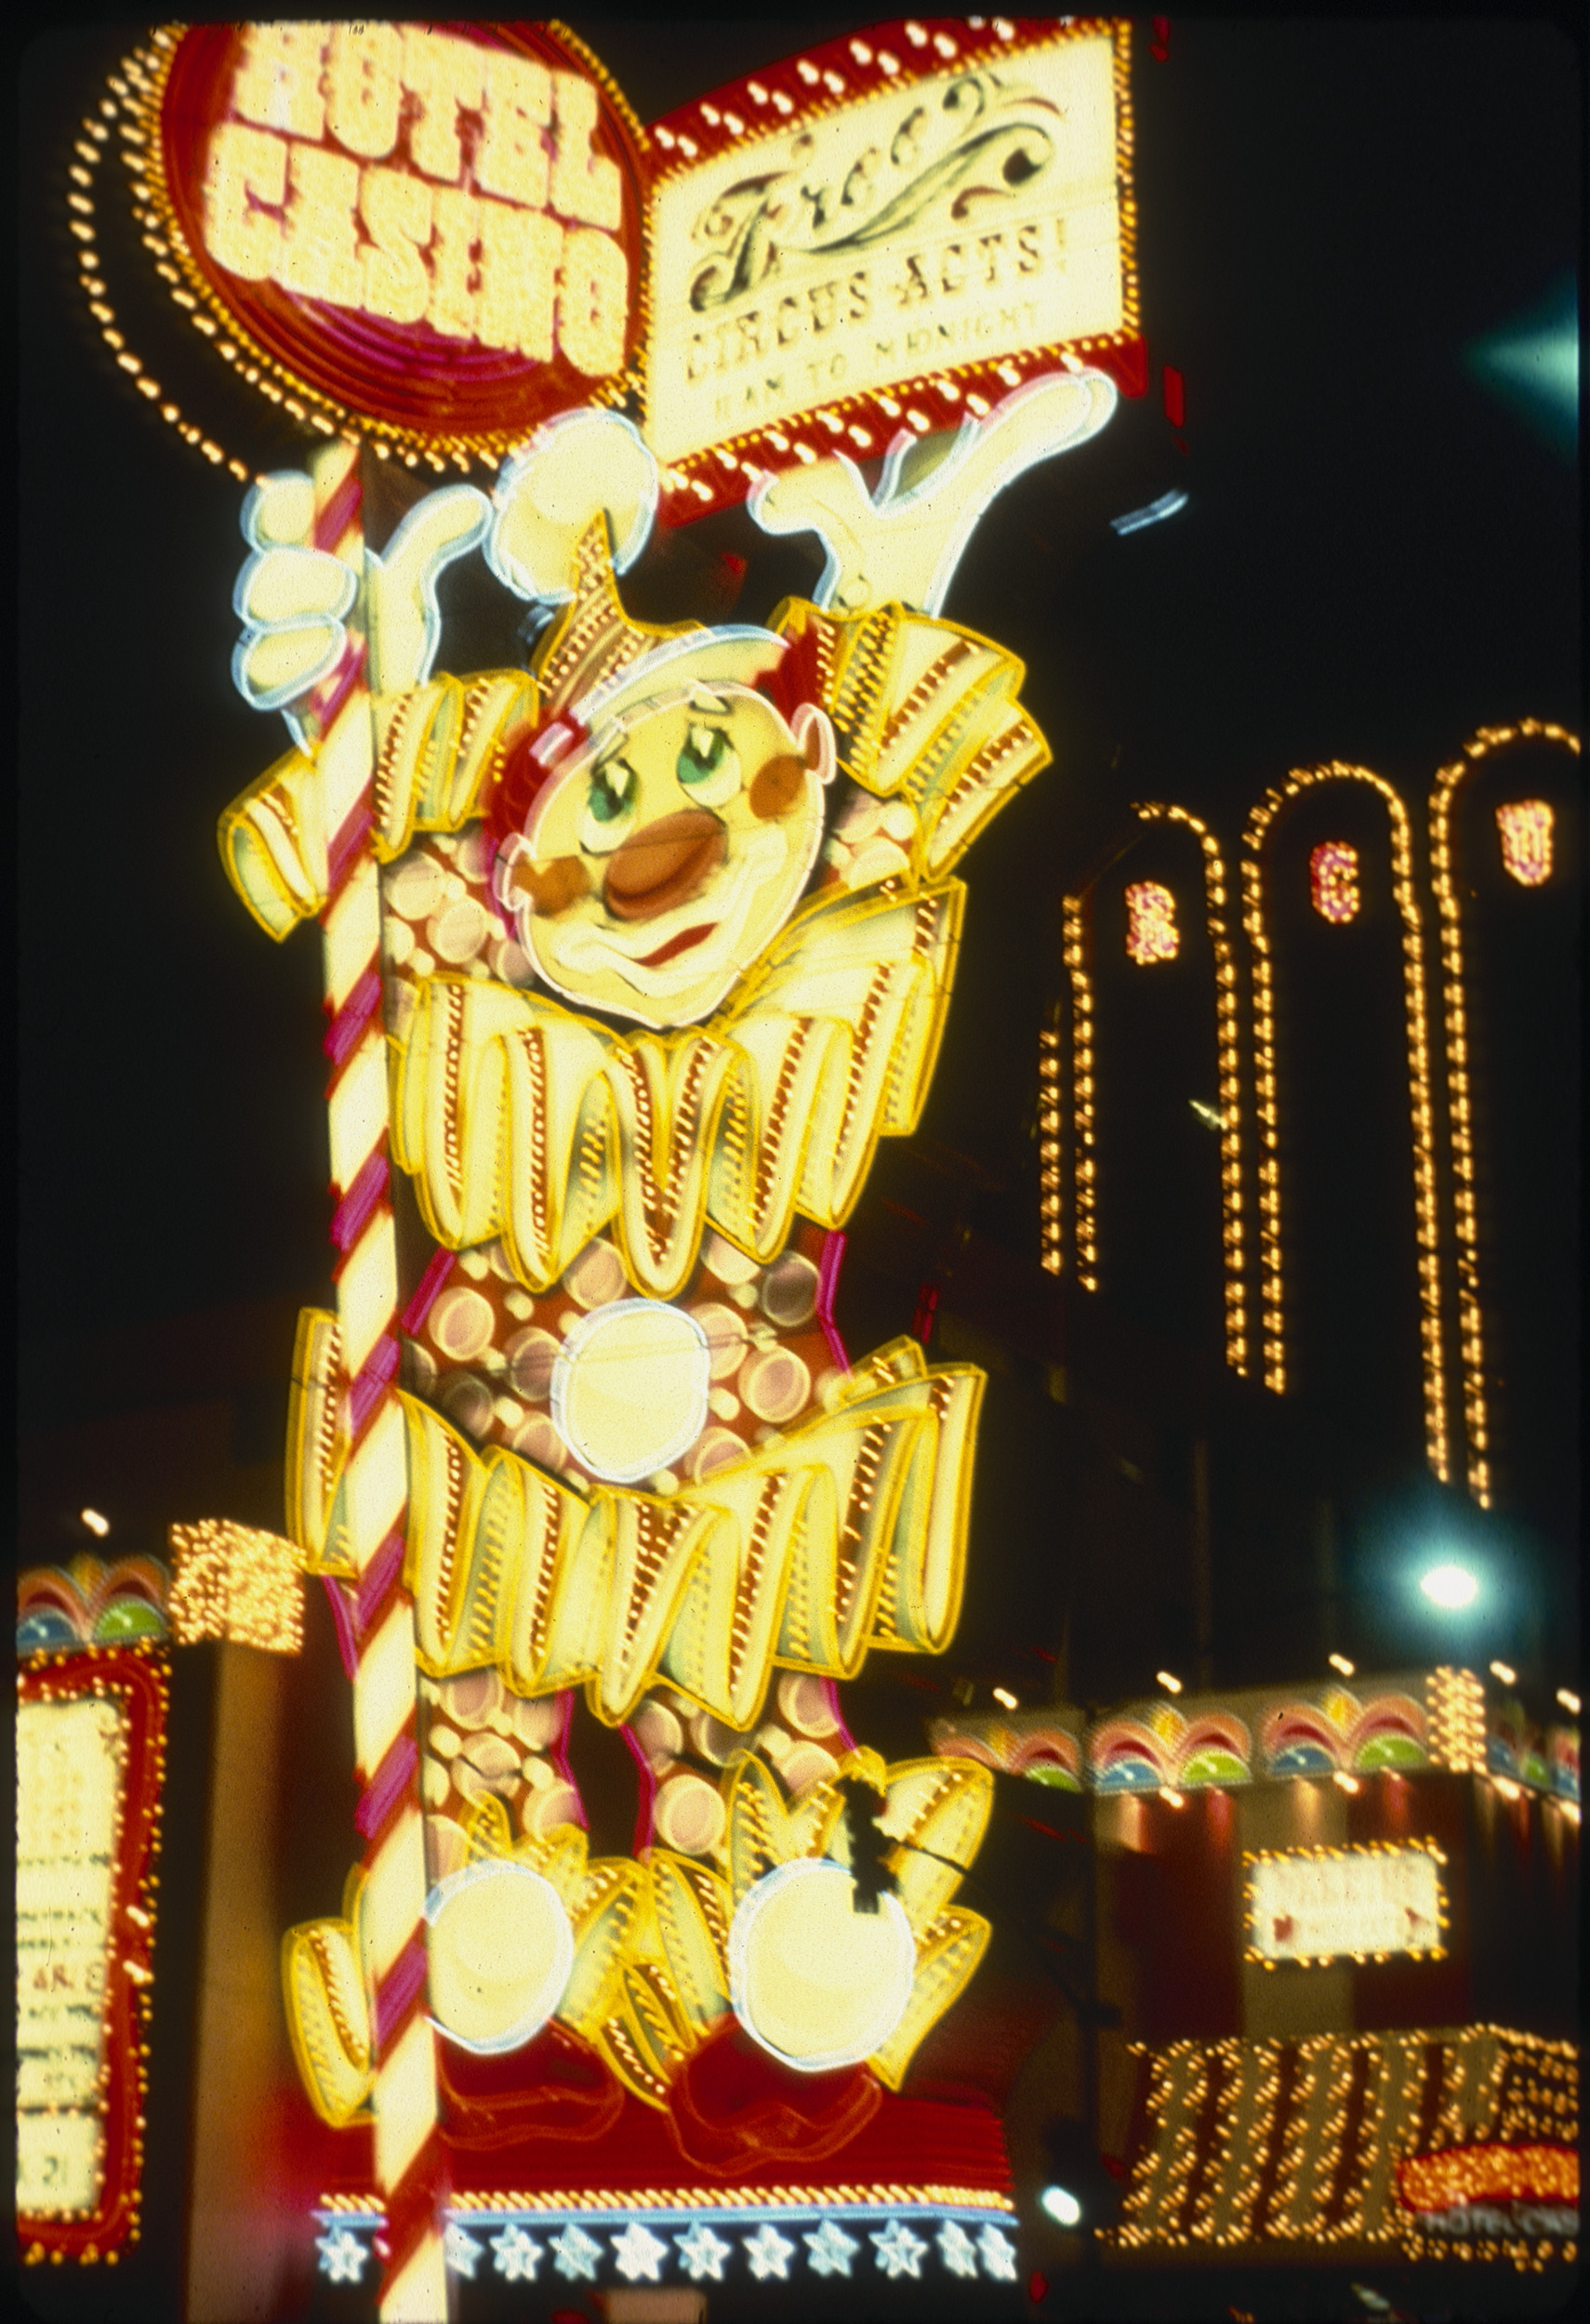 Slide of Circus Circus, Las Vegas, 1986